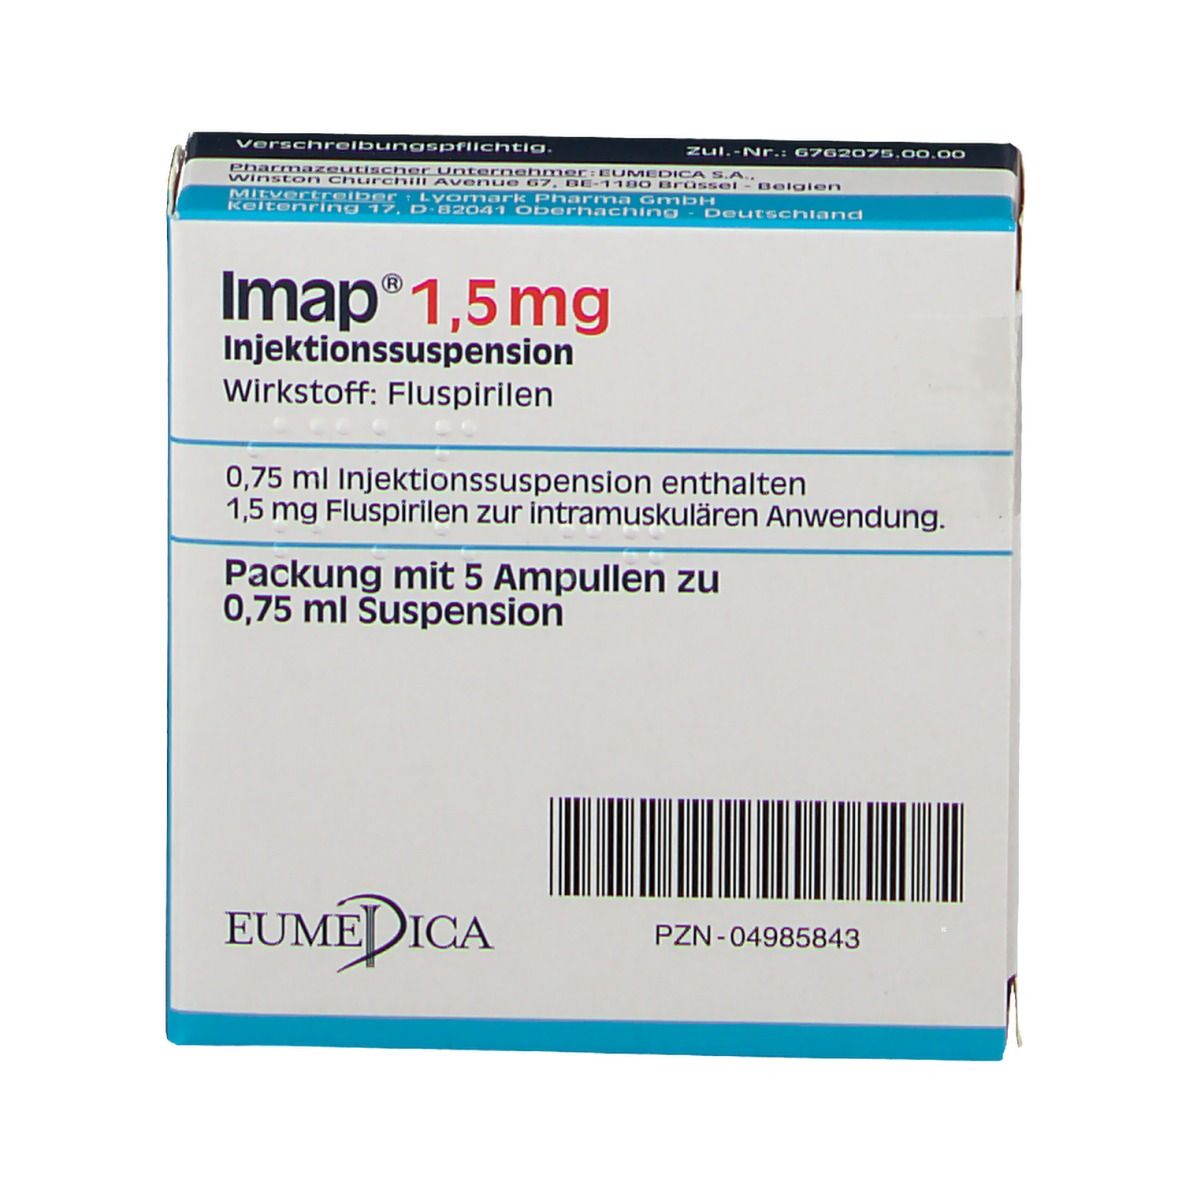 Imap® 1,5 mg